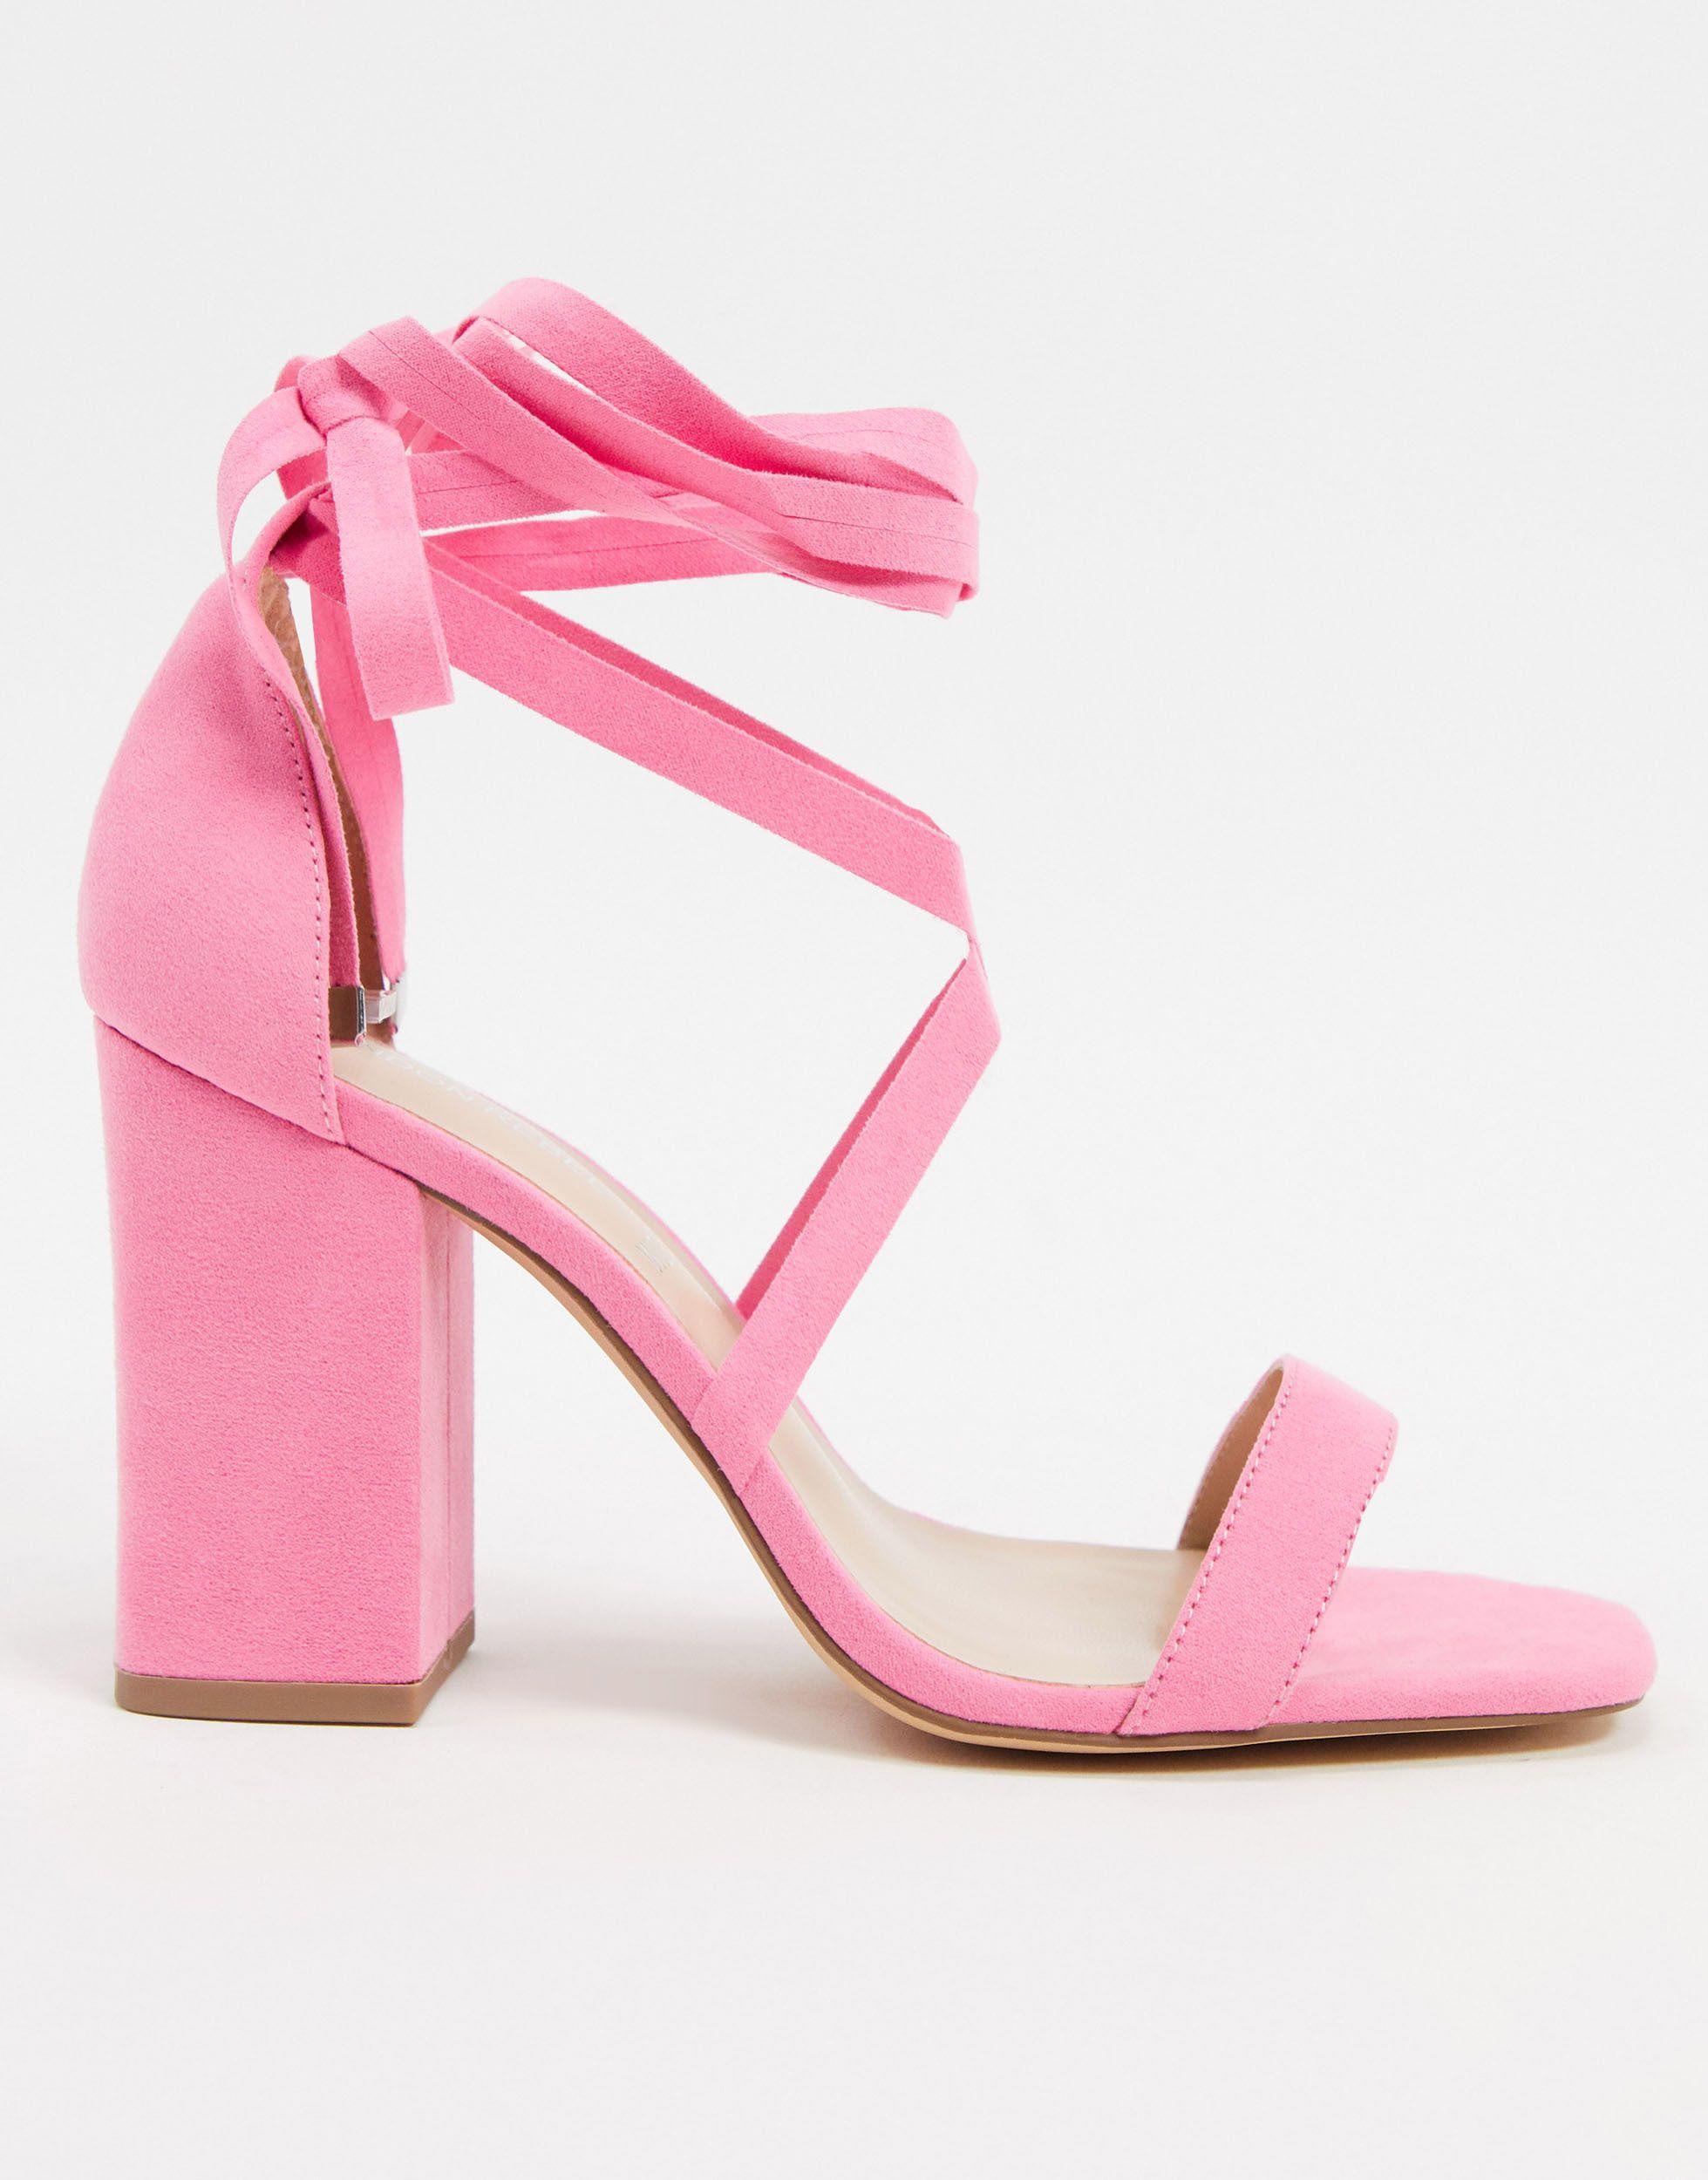 London Rebel Wide Fit Tie Leg Block Heeled Sandals in Pink - Lyst